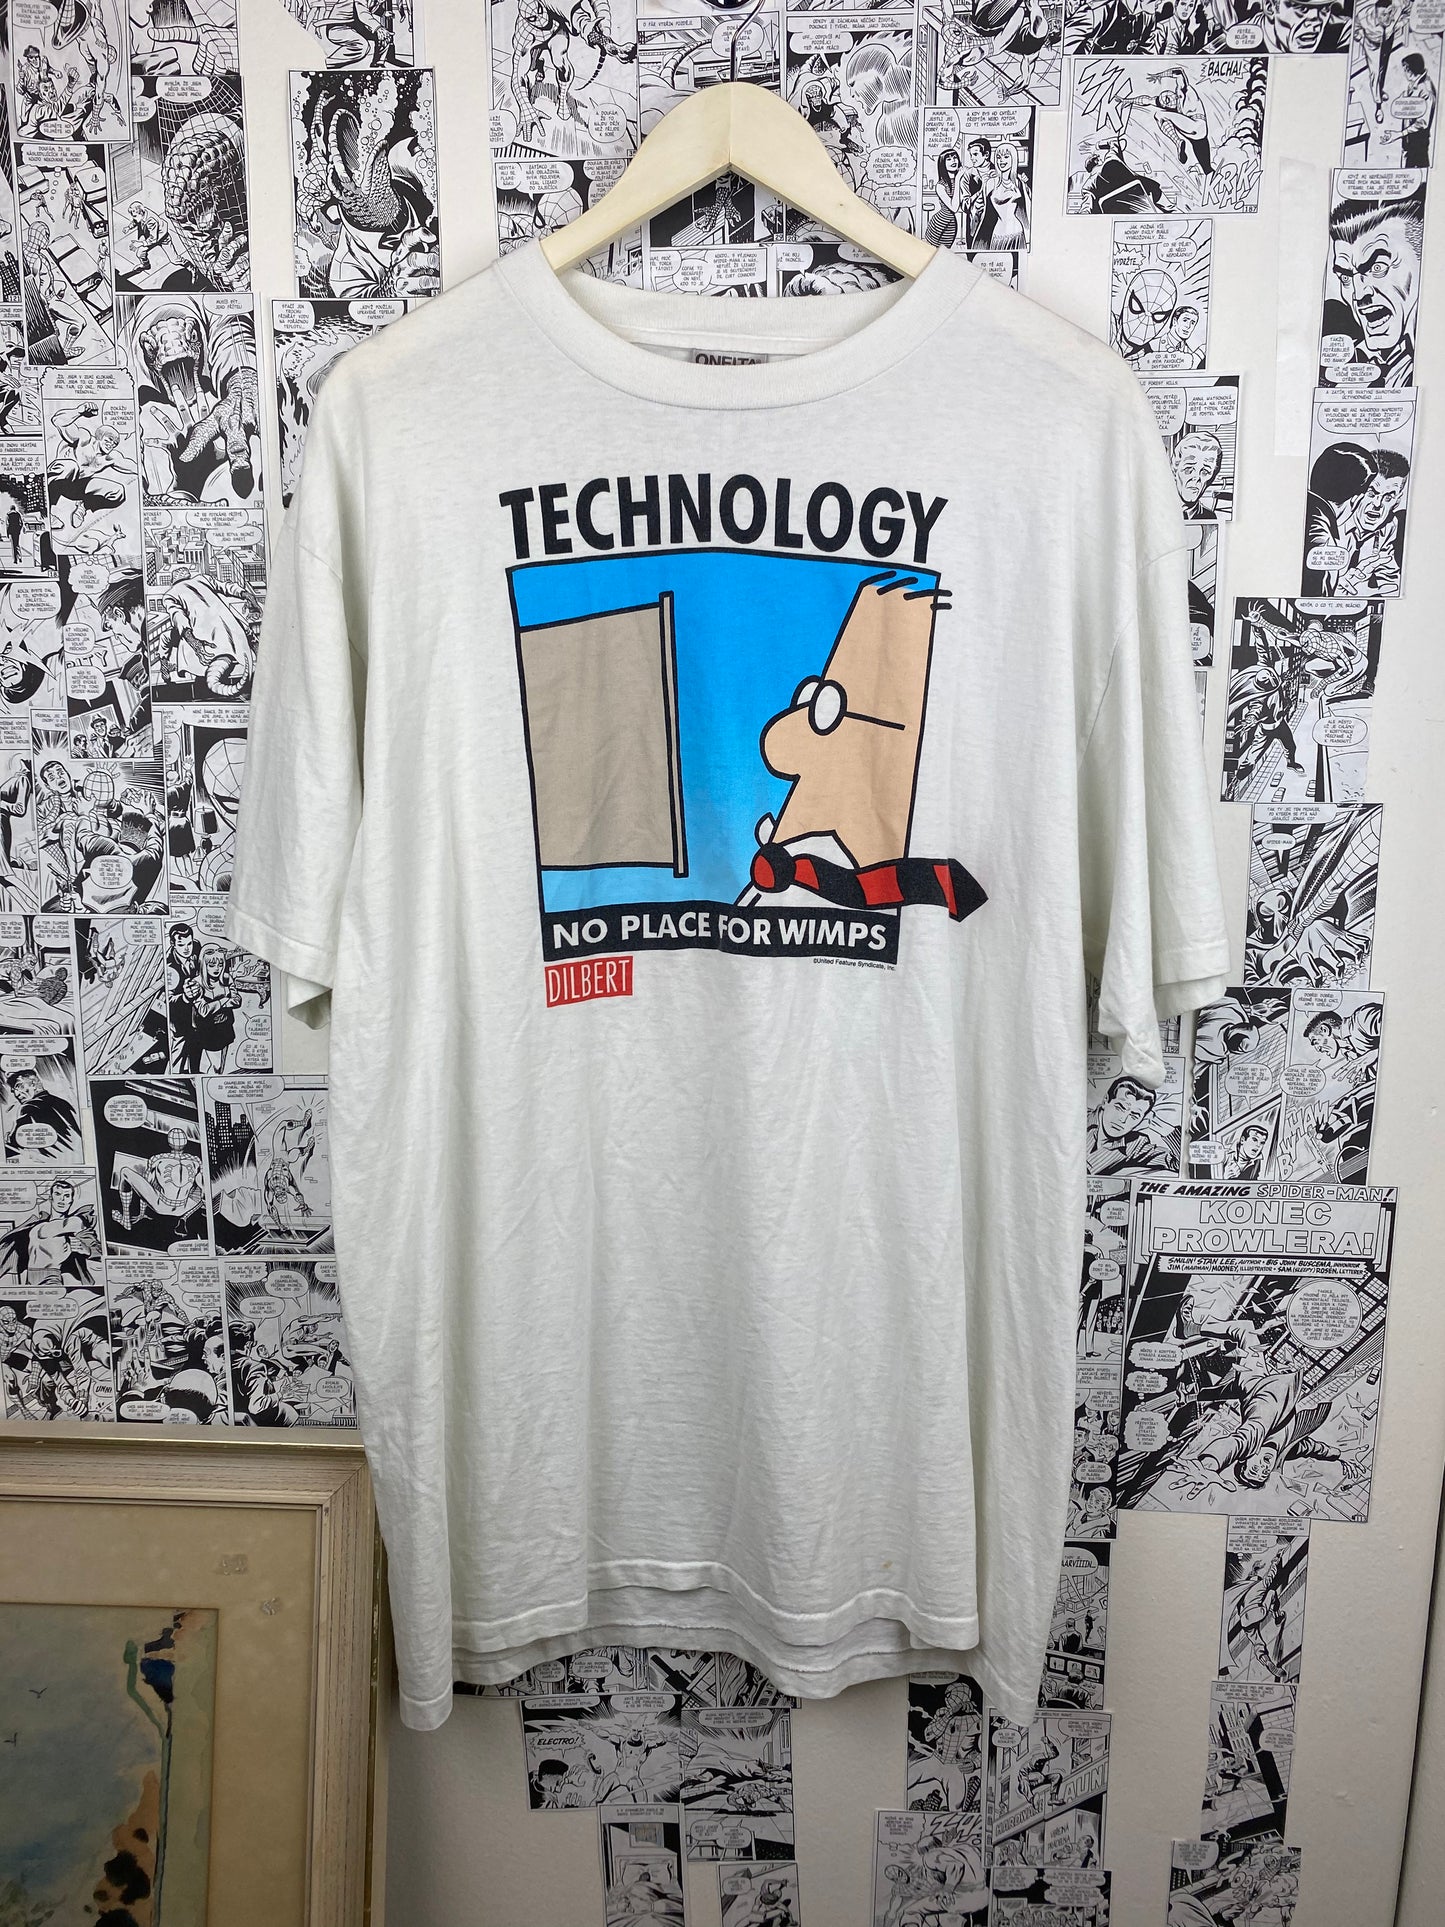 Vintage “Technology - Dilbert” 90s t-shirt - size XL